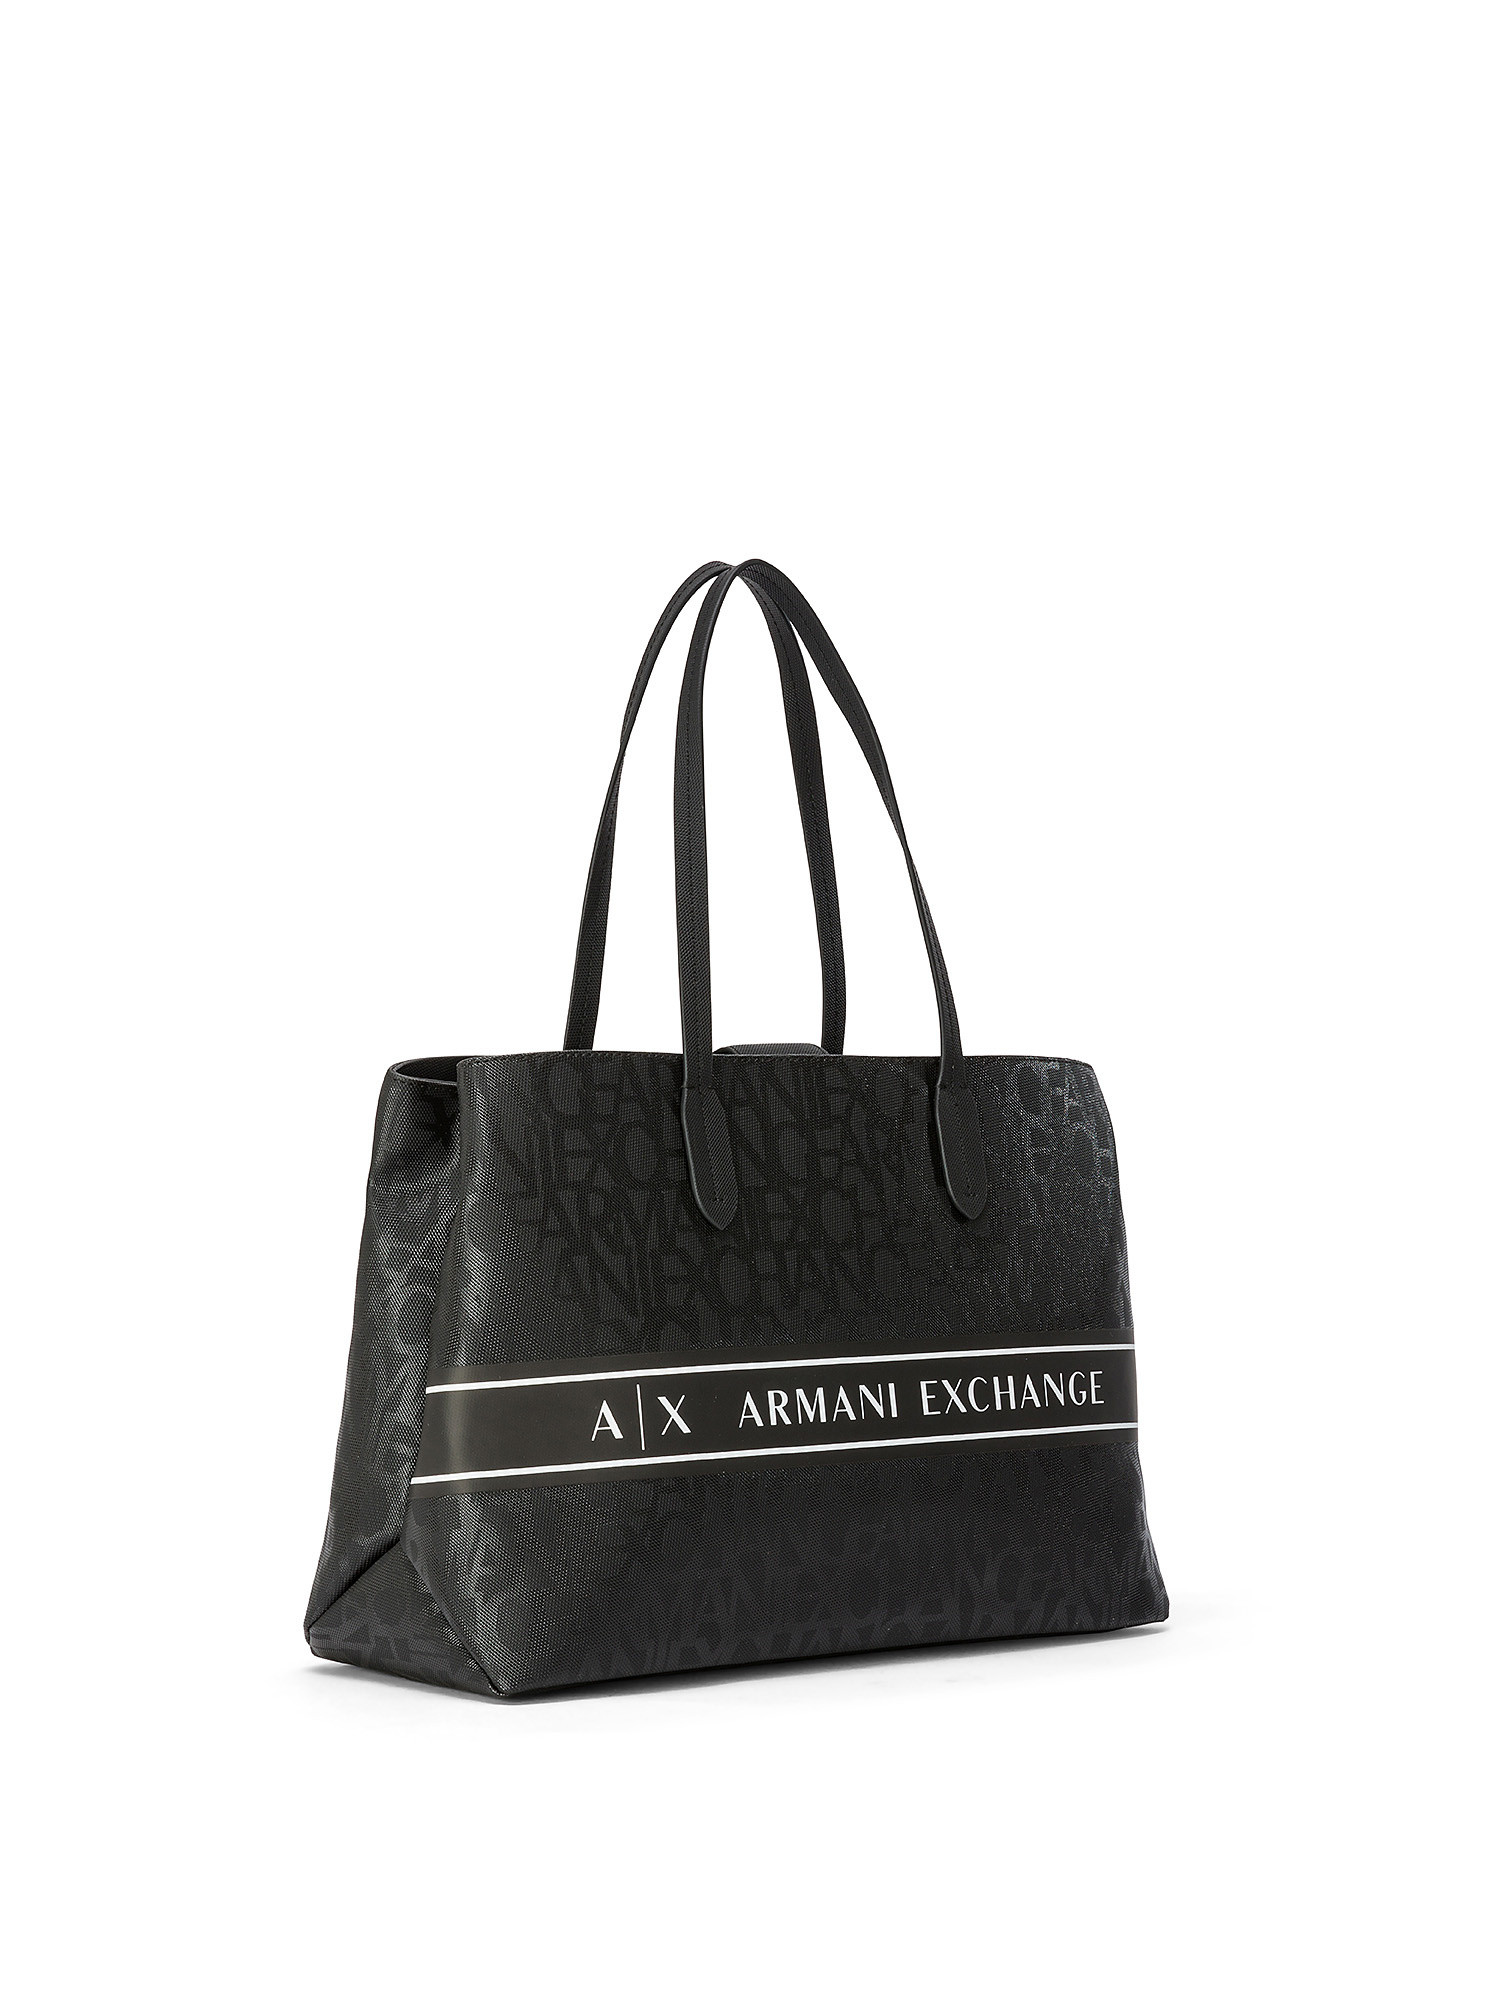 Armani Exchange - Shopper bag con logo all over, Nero, large image number 1